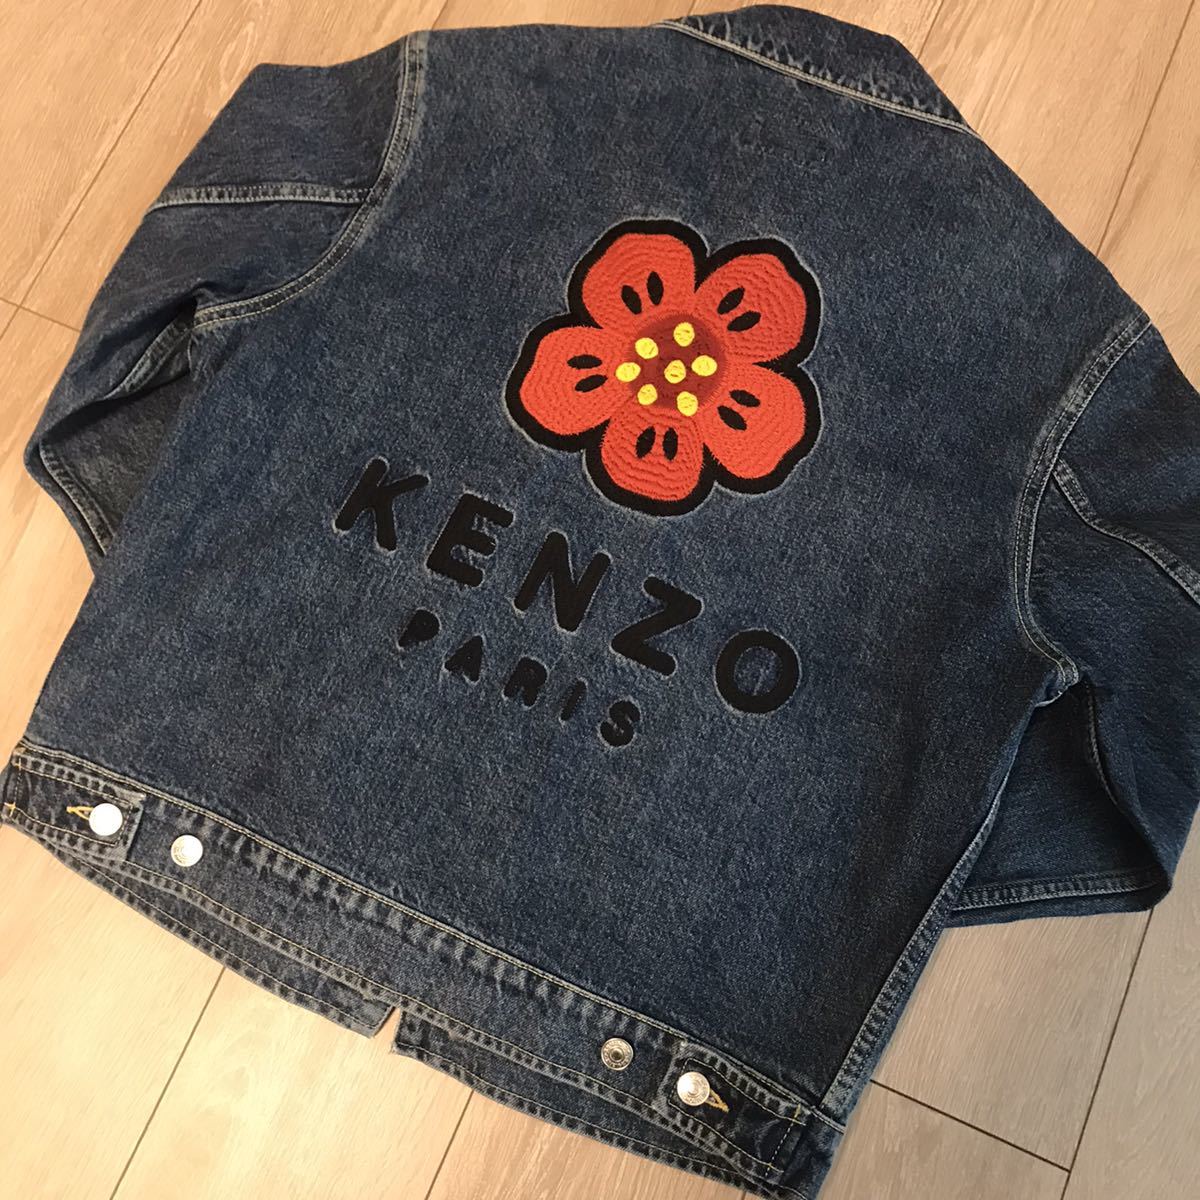  новый товар не использовался KENZO 22SS Boke Flower Embroidered Denim Trucker Jacket NIGO период Kenzo выцветание цветок embro Ida -do Denim жакет S